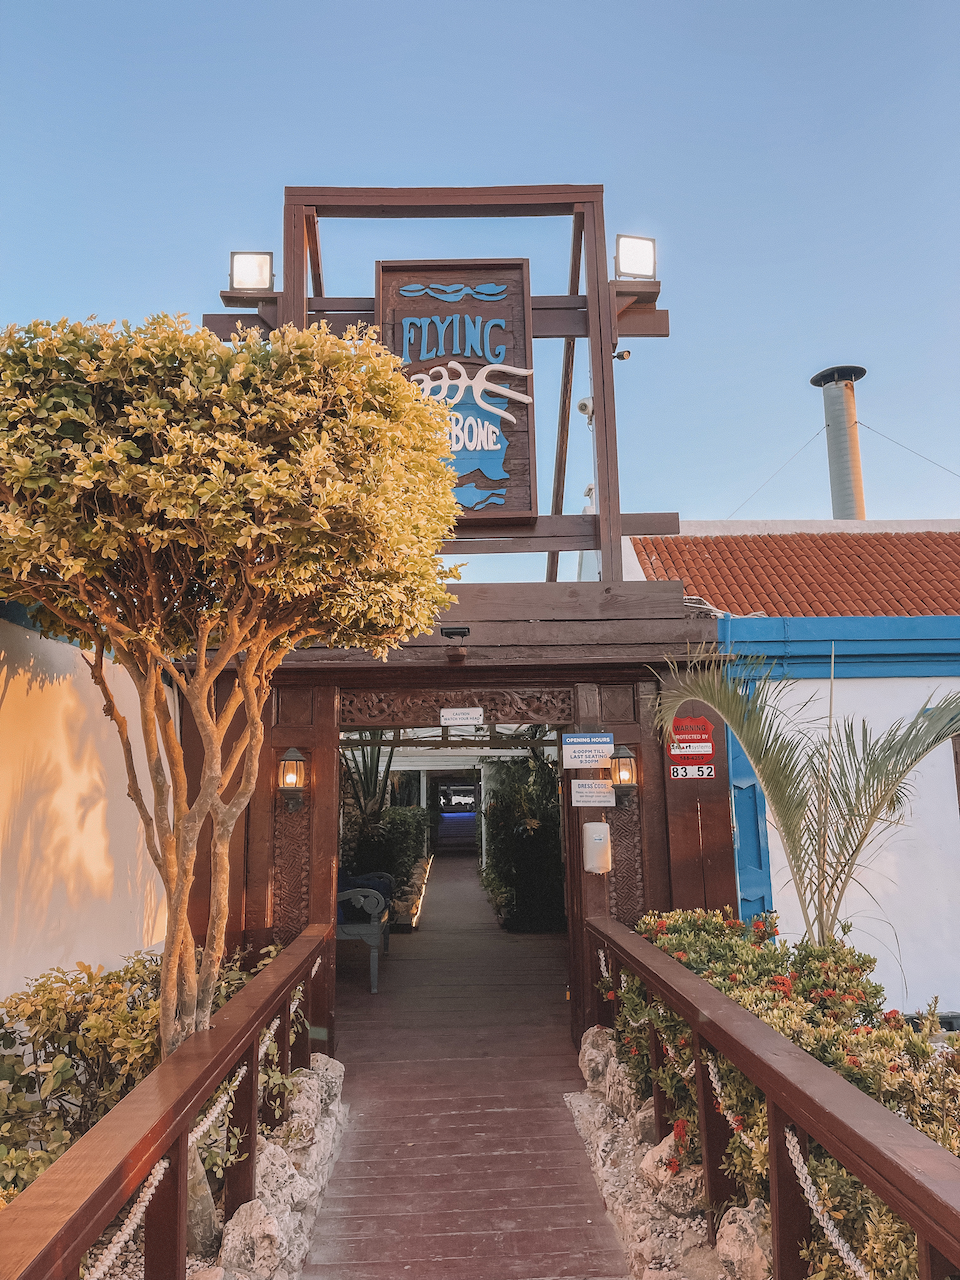 Flying Fishbone restaurant entrance - Aruba - ABC Islands